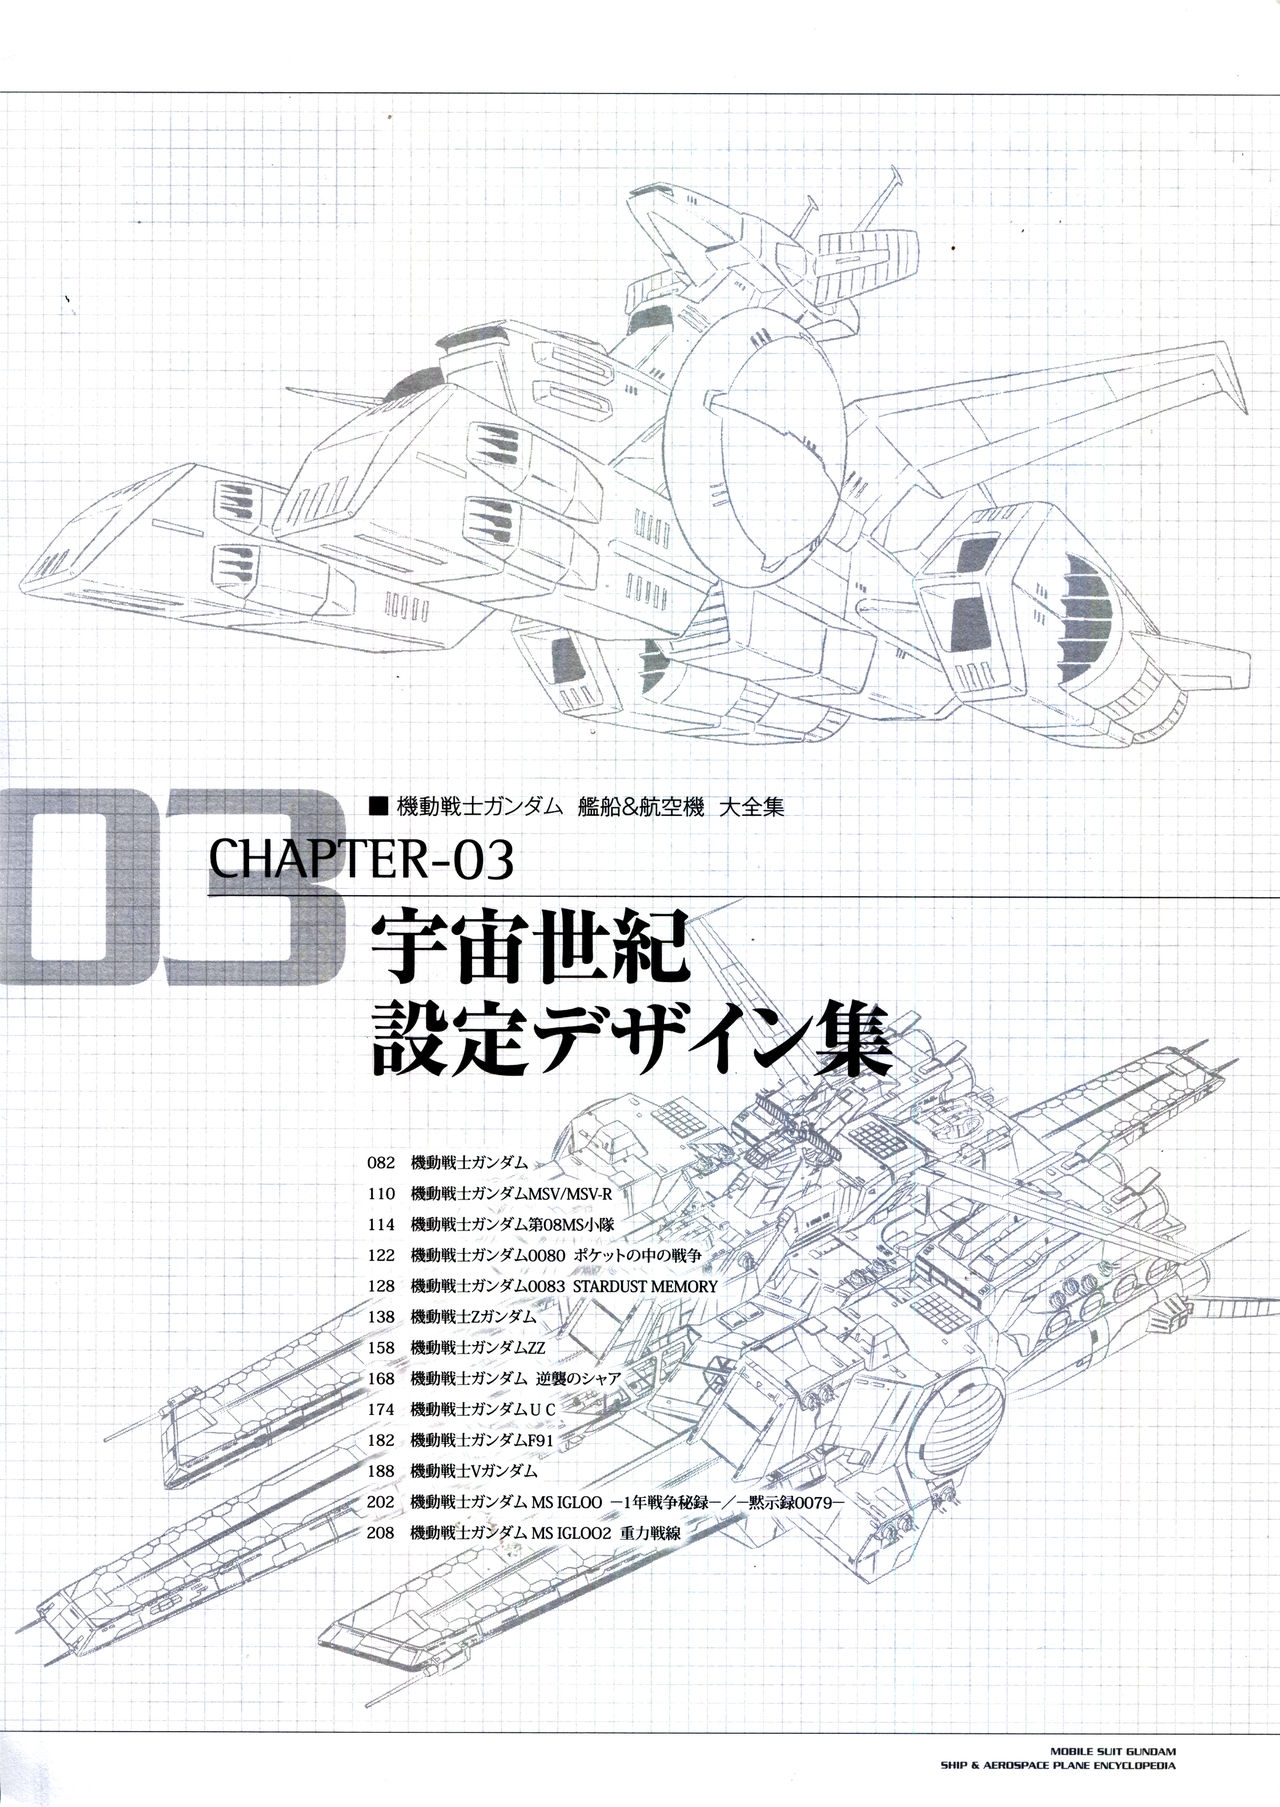 Mobile Suit Gundam - Ship & Aerospace Plane Encyclopedia - Revised Edition 86